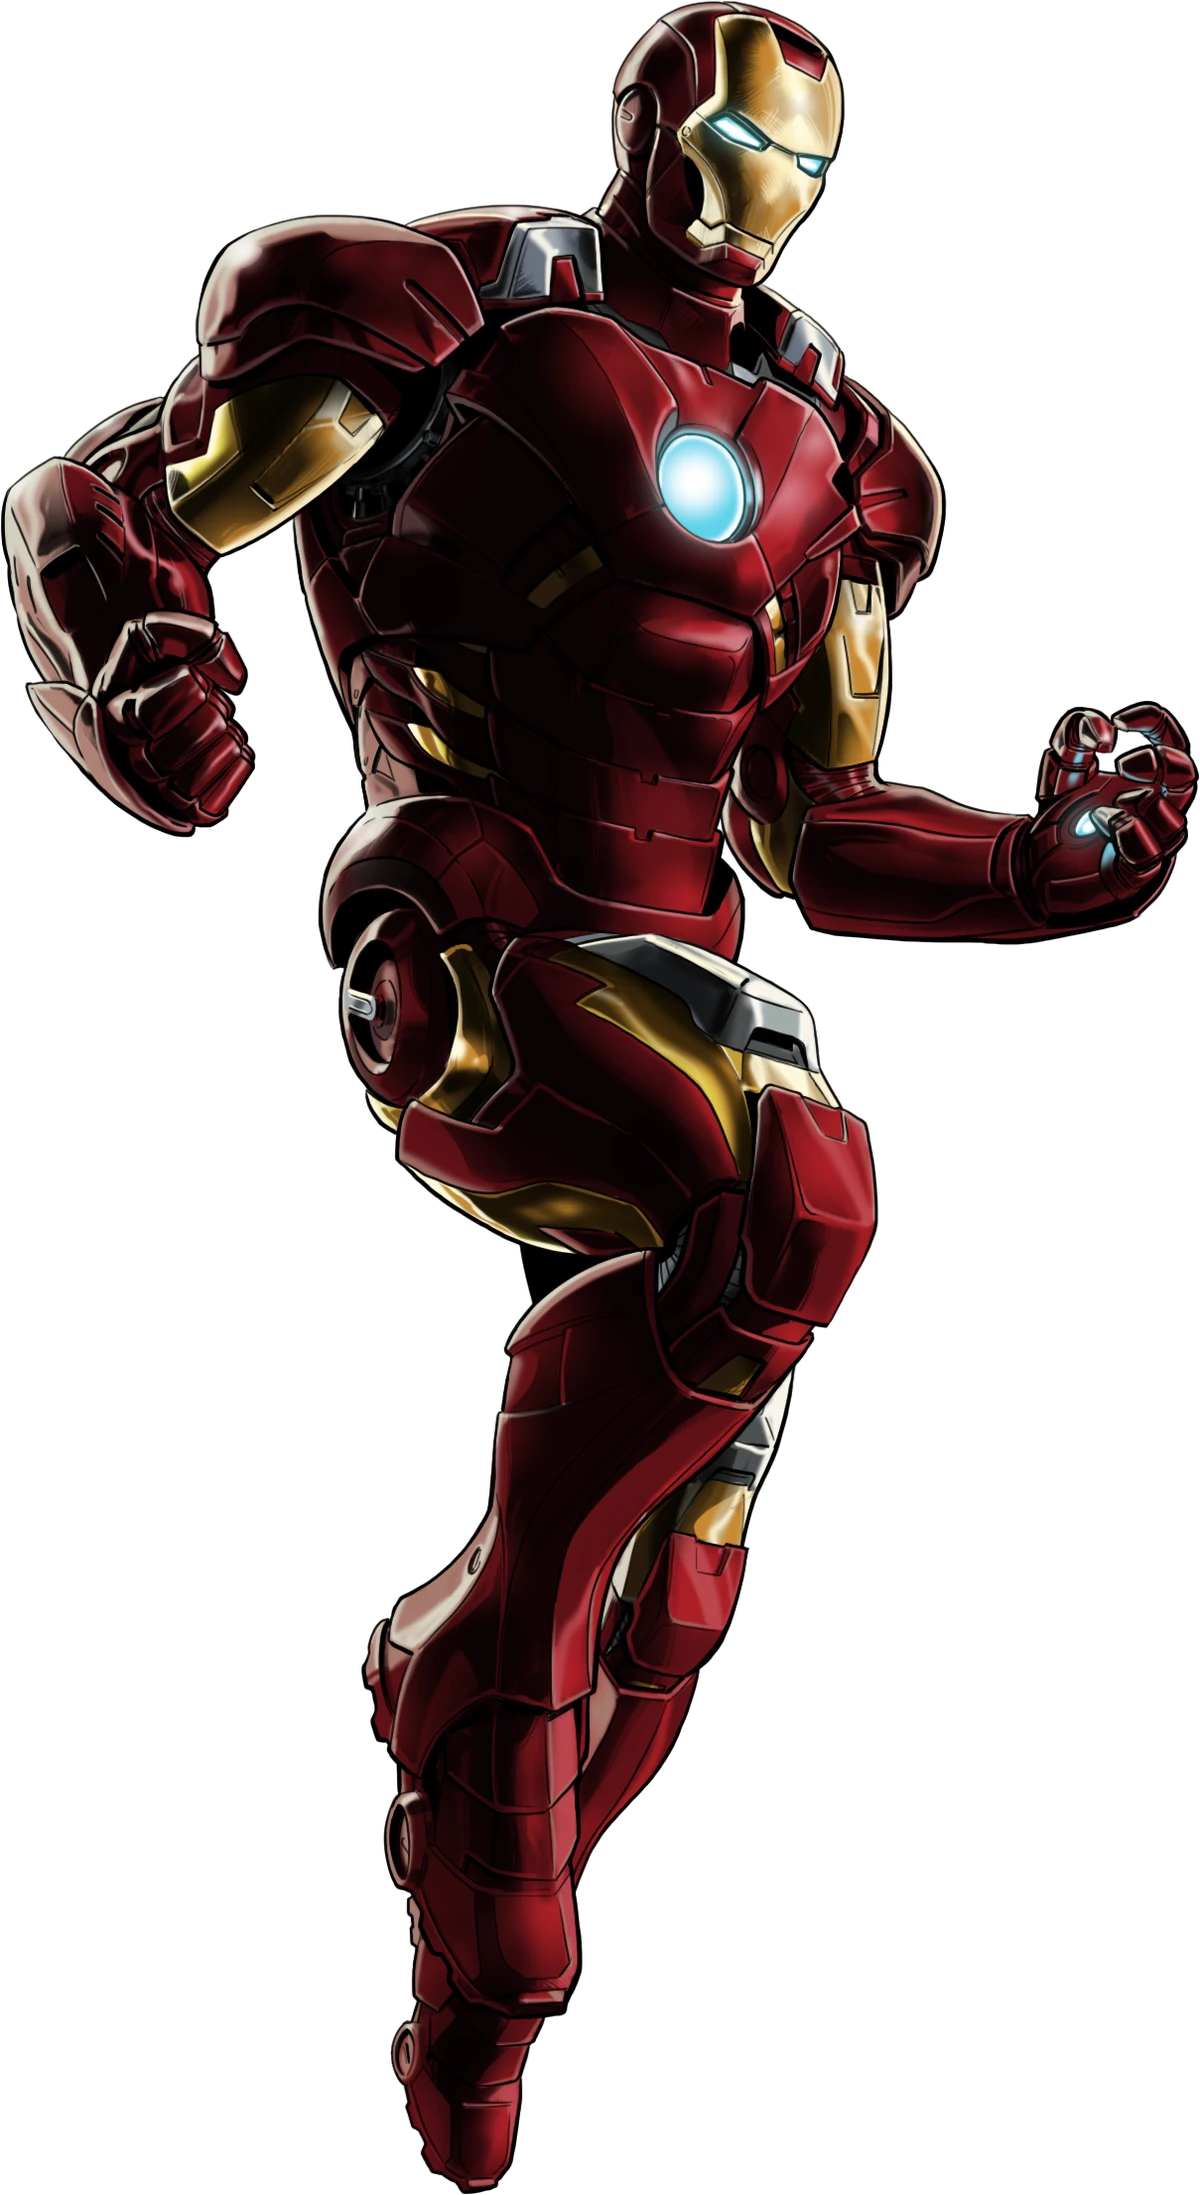 Marvel: Crisis Protocol Iron Fist DLY-30